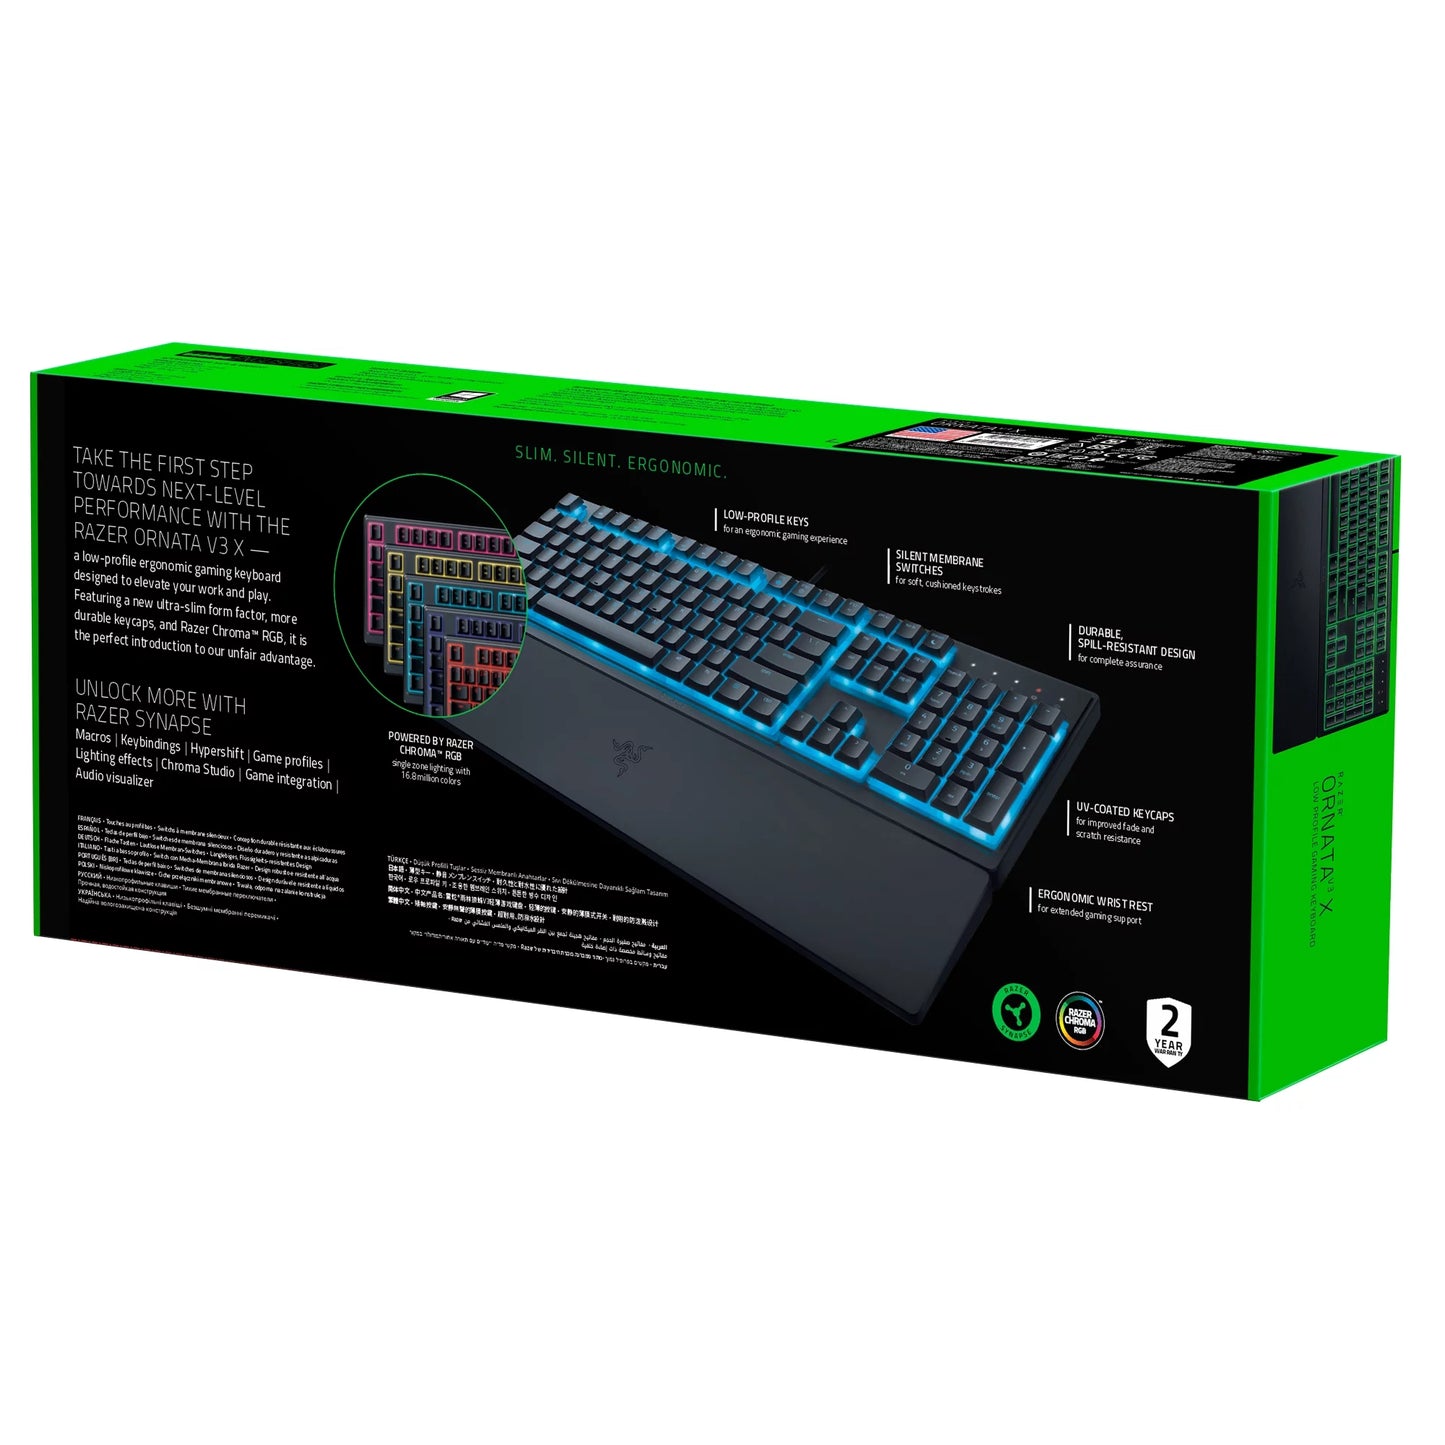 Ornata V3 X Full-Size Wired Membrane Gaming Keyboard for PC, Chroma RGB, Wrist Rest, Black